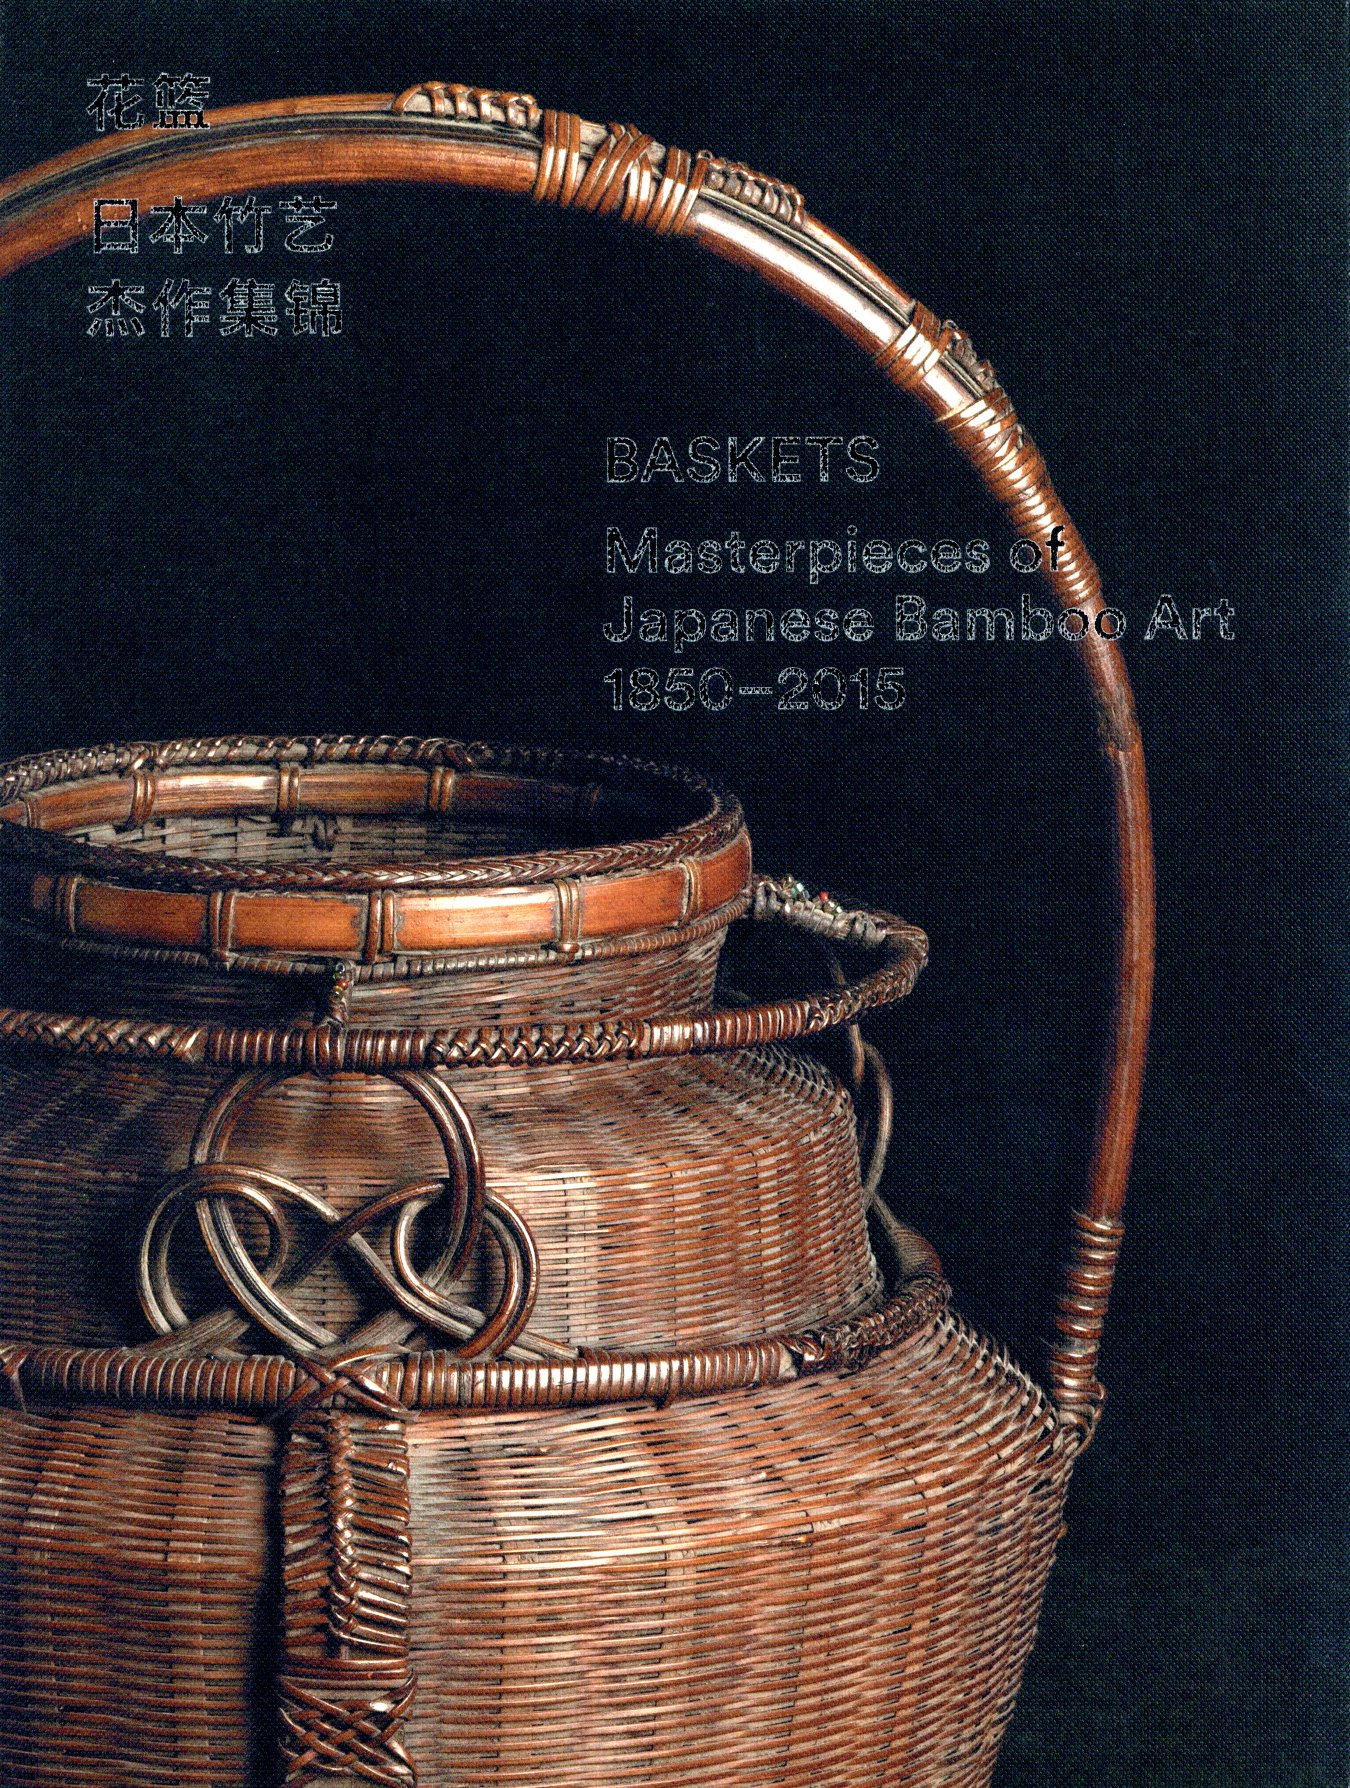 Baskets Masterpieces of Japanese Bamboo Art 18502015 English English
and Japanese Edition Epub-Ebook